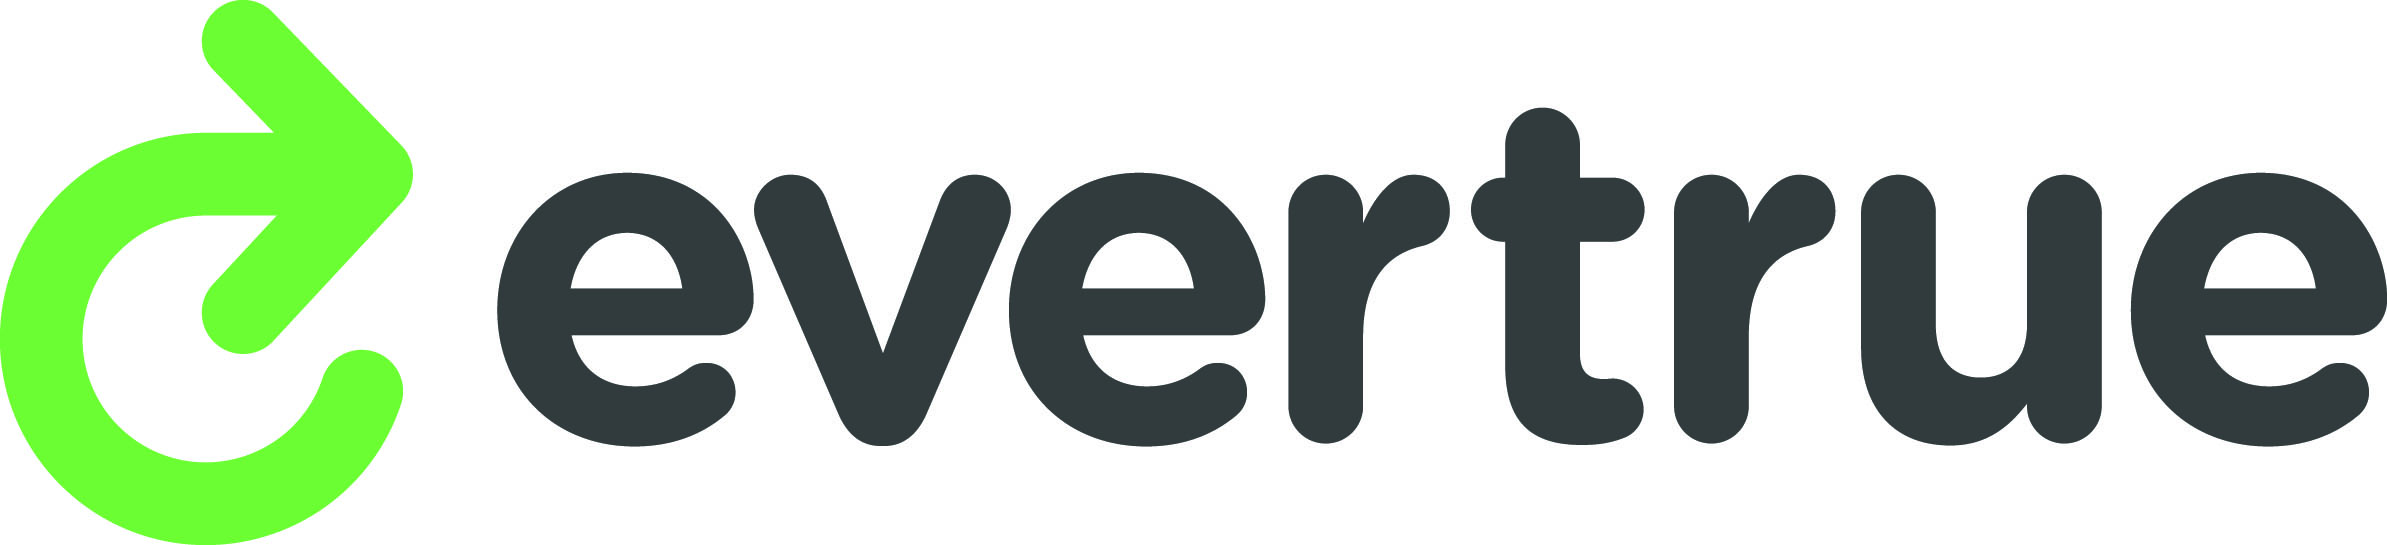 Evertrue logo